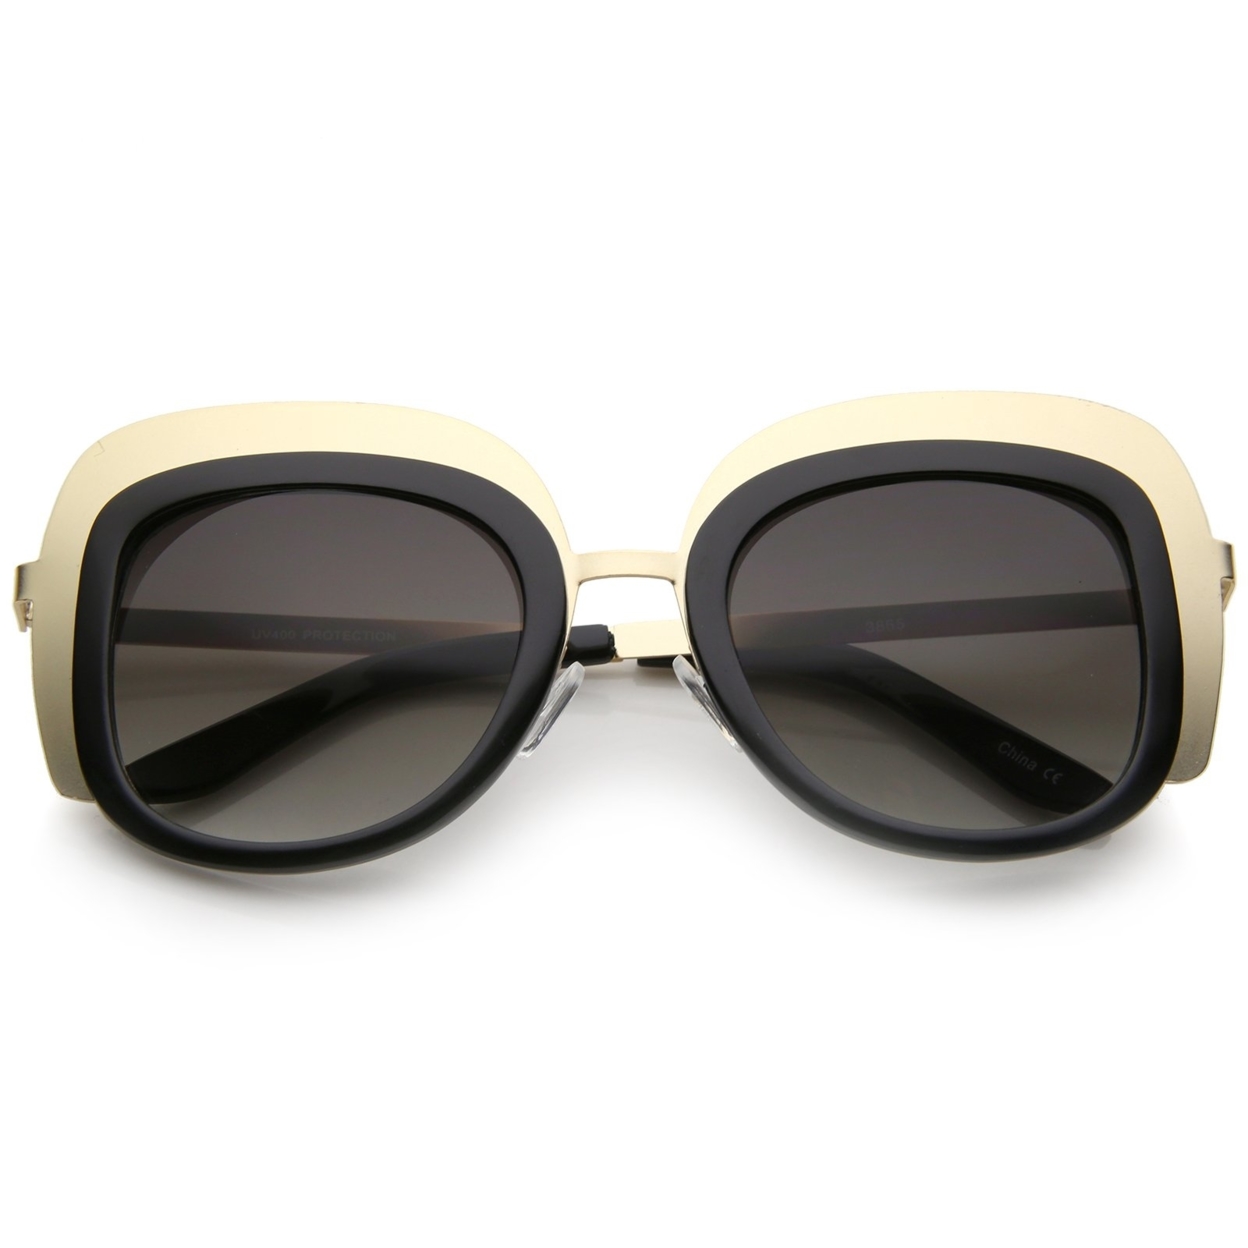 Women's Oversize Two-Tone Metal Frame Border Square Sunglasses 43mm - Silver-Black / Smoke